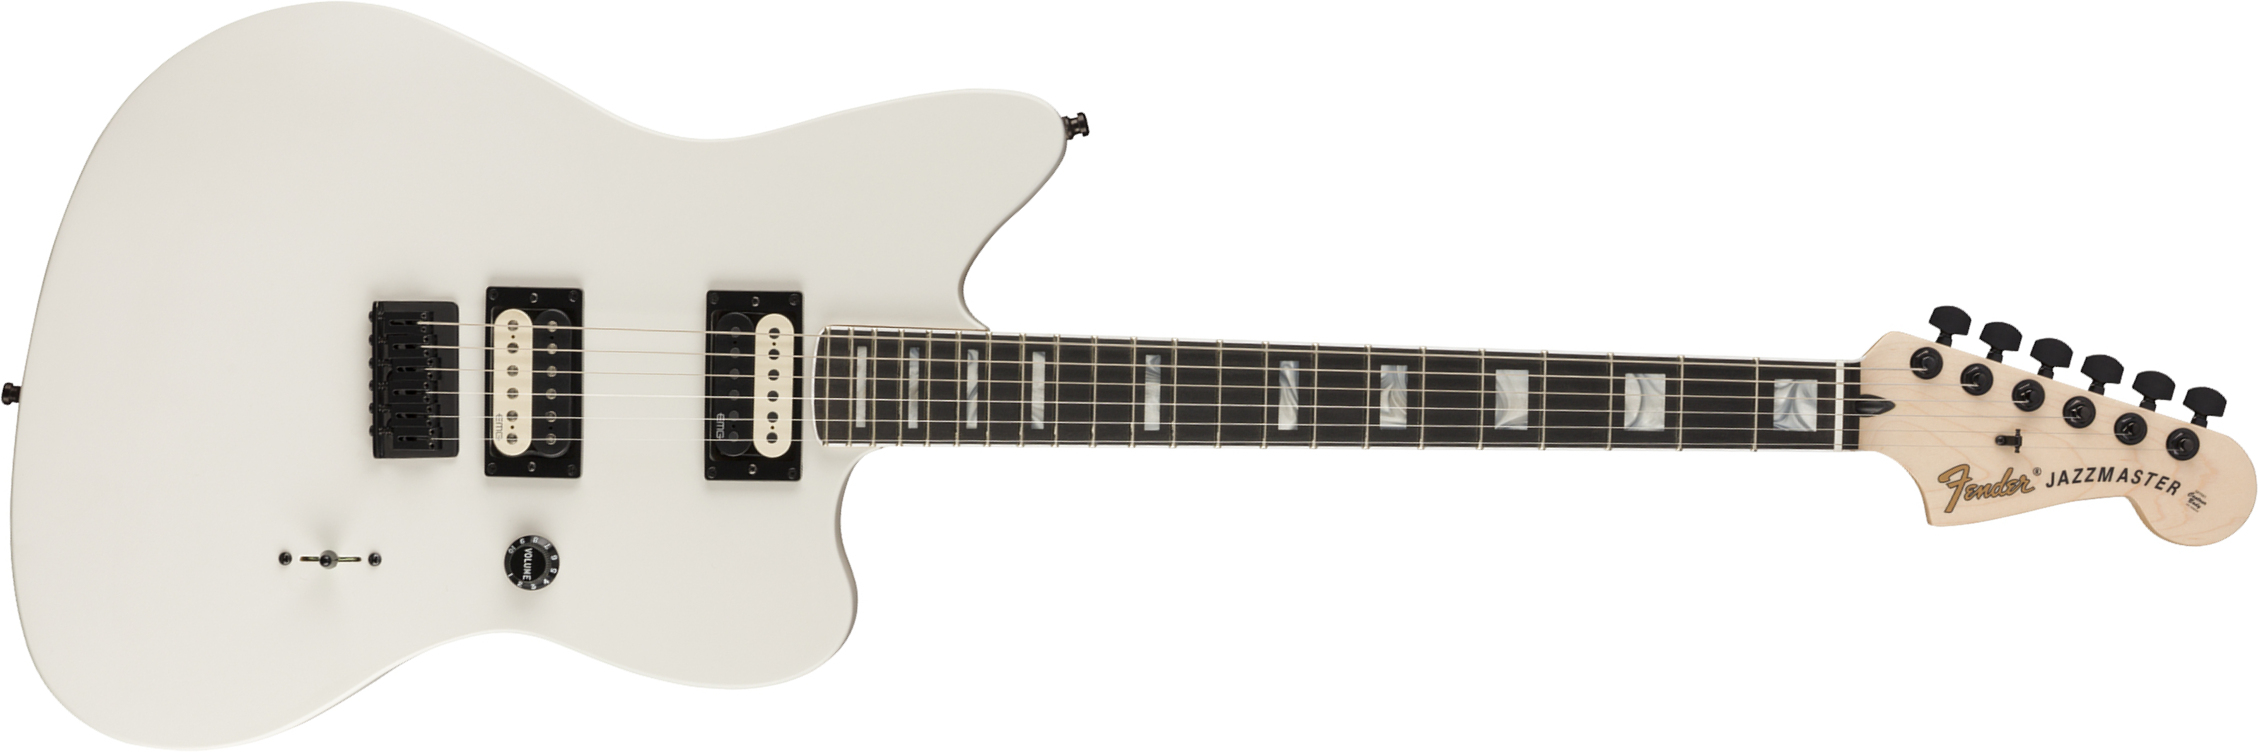 Fender Jim Root Jazzmaster V4 Mex Signature Hh Emg Ht Eb - Artic White - Retro-rock elektrische gitaar - Main picture